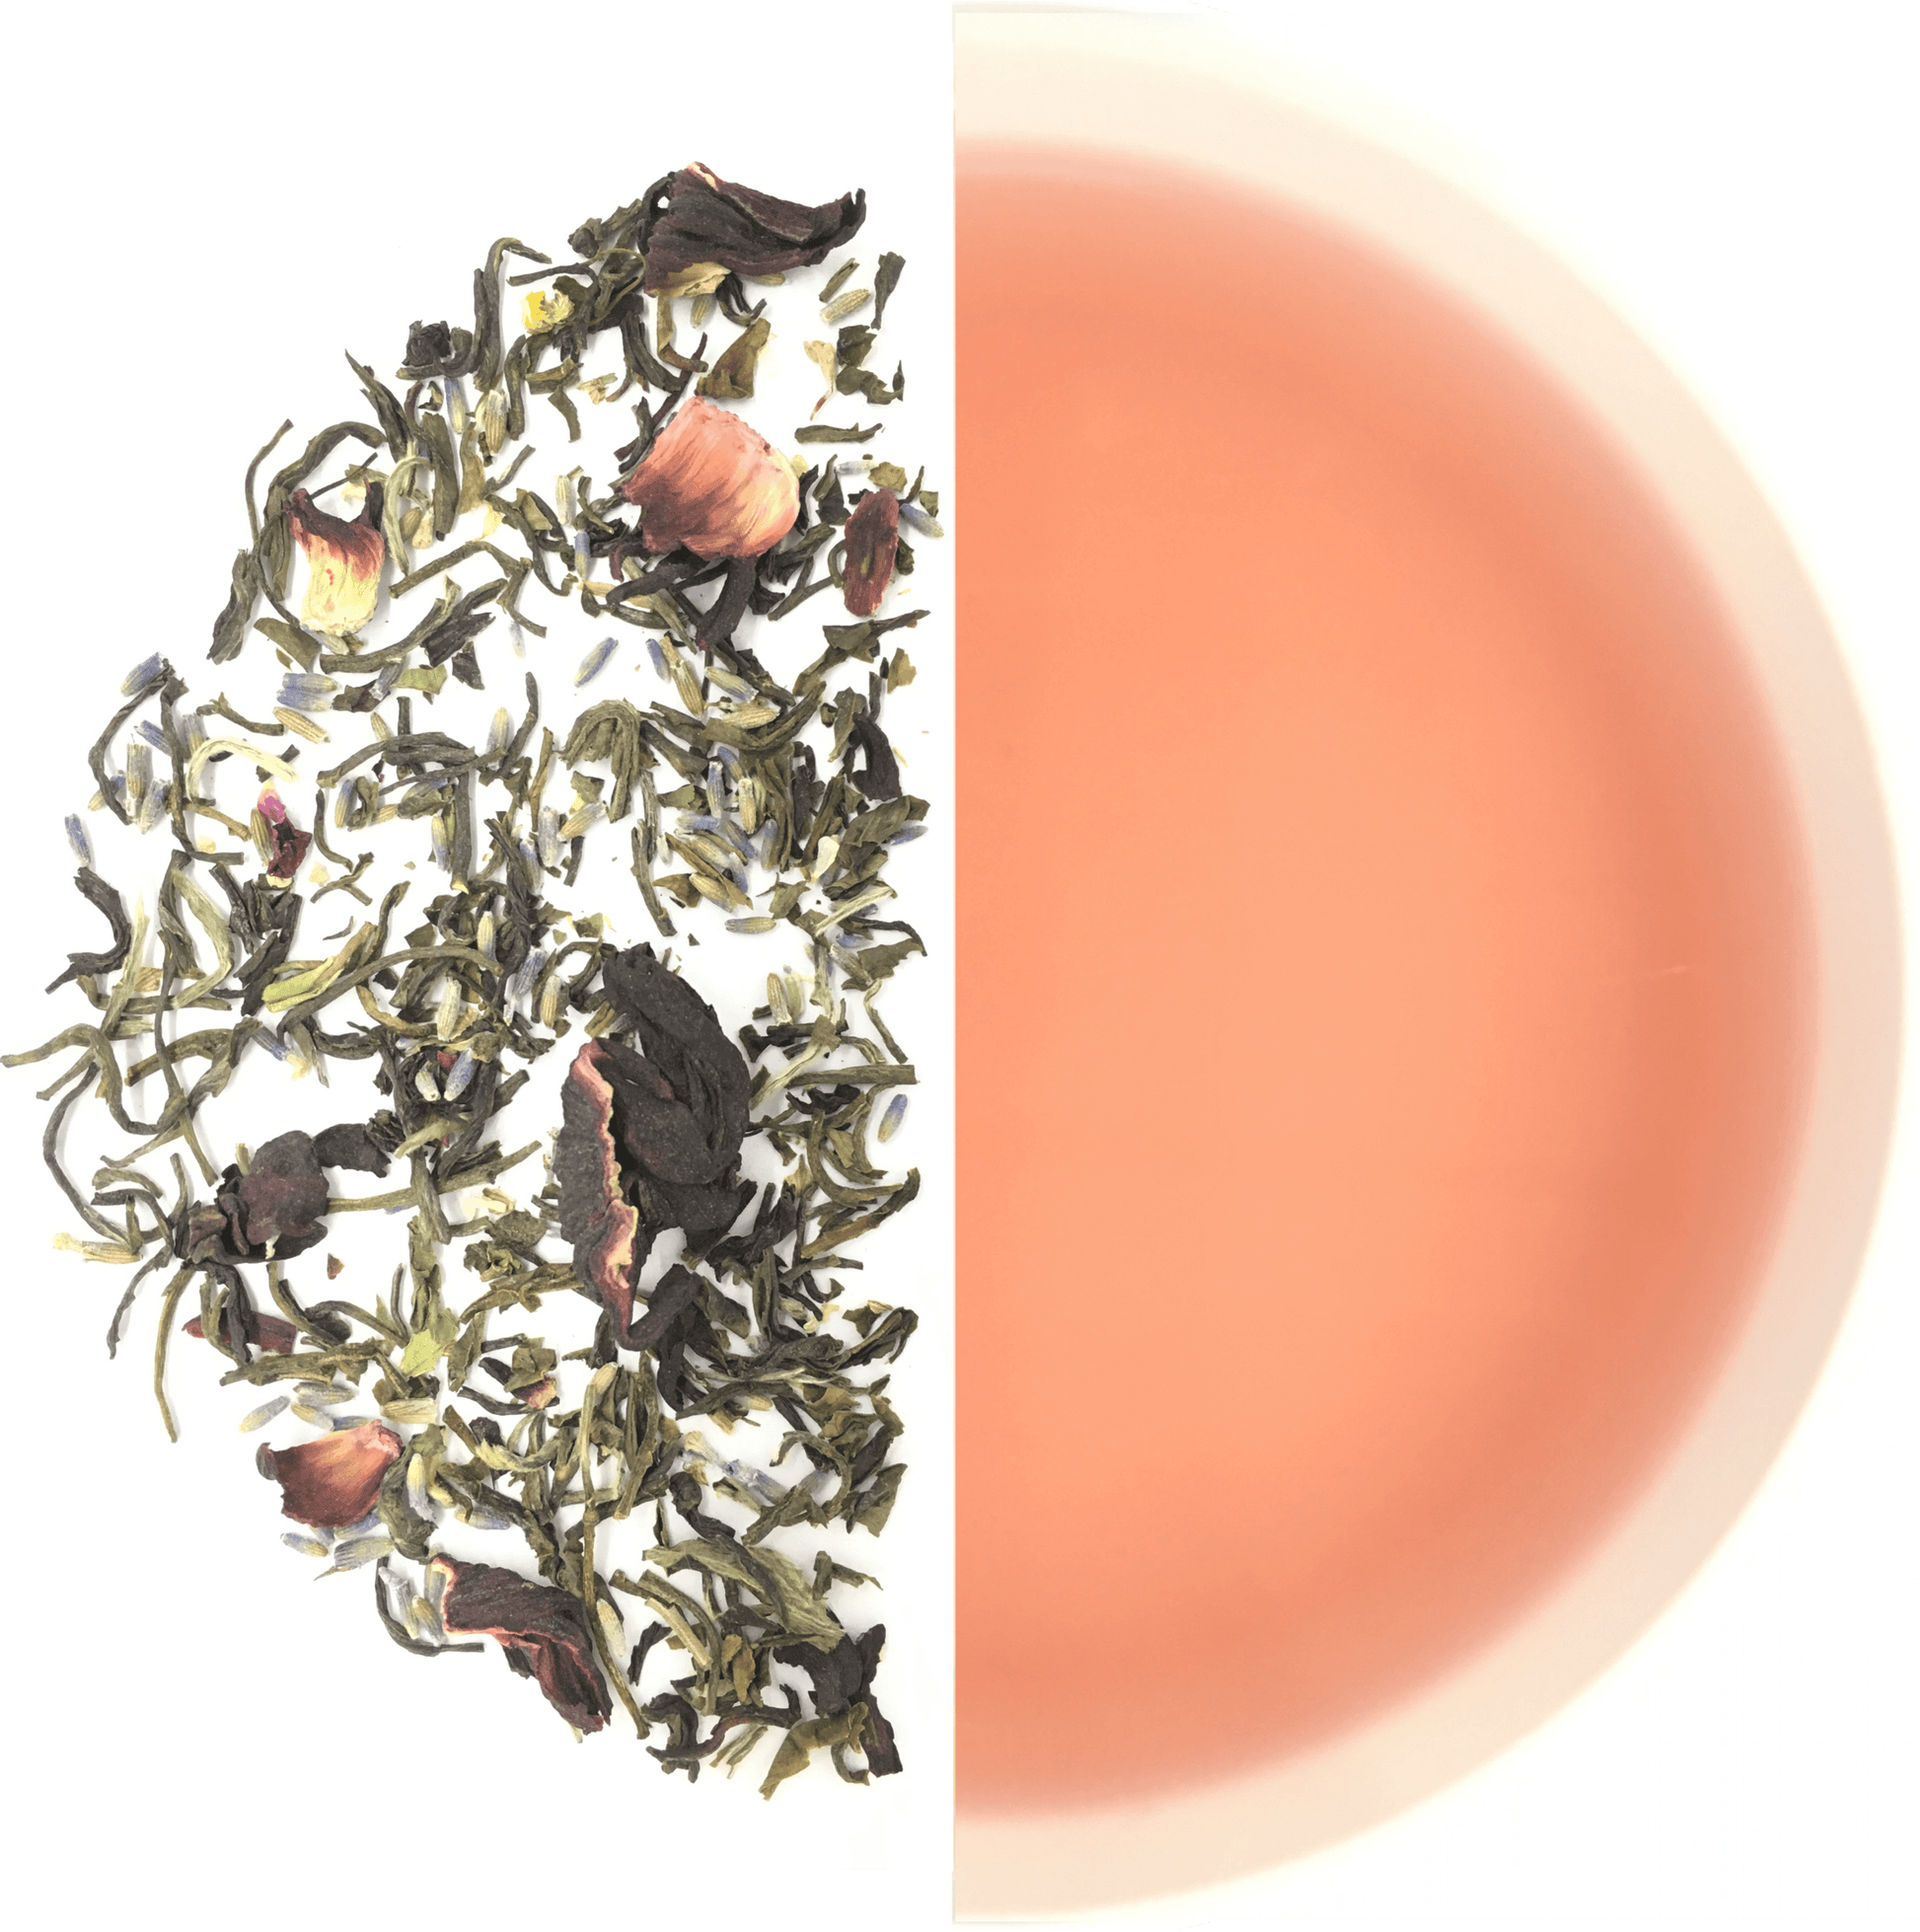 Lavender Hibiscus Green Tea - Tassyam Organics